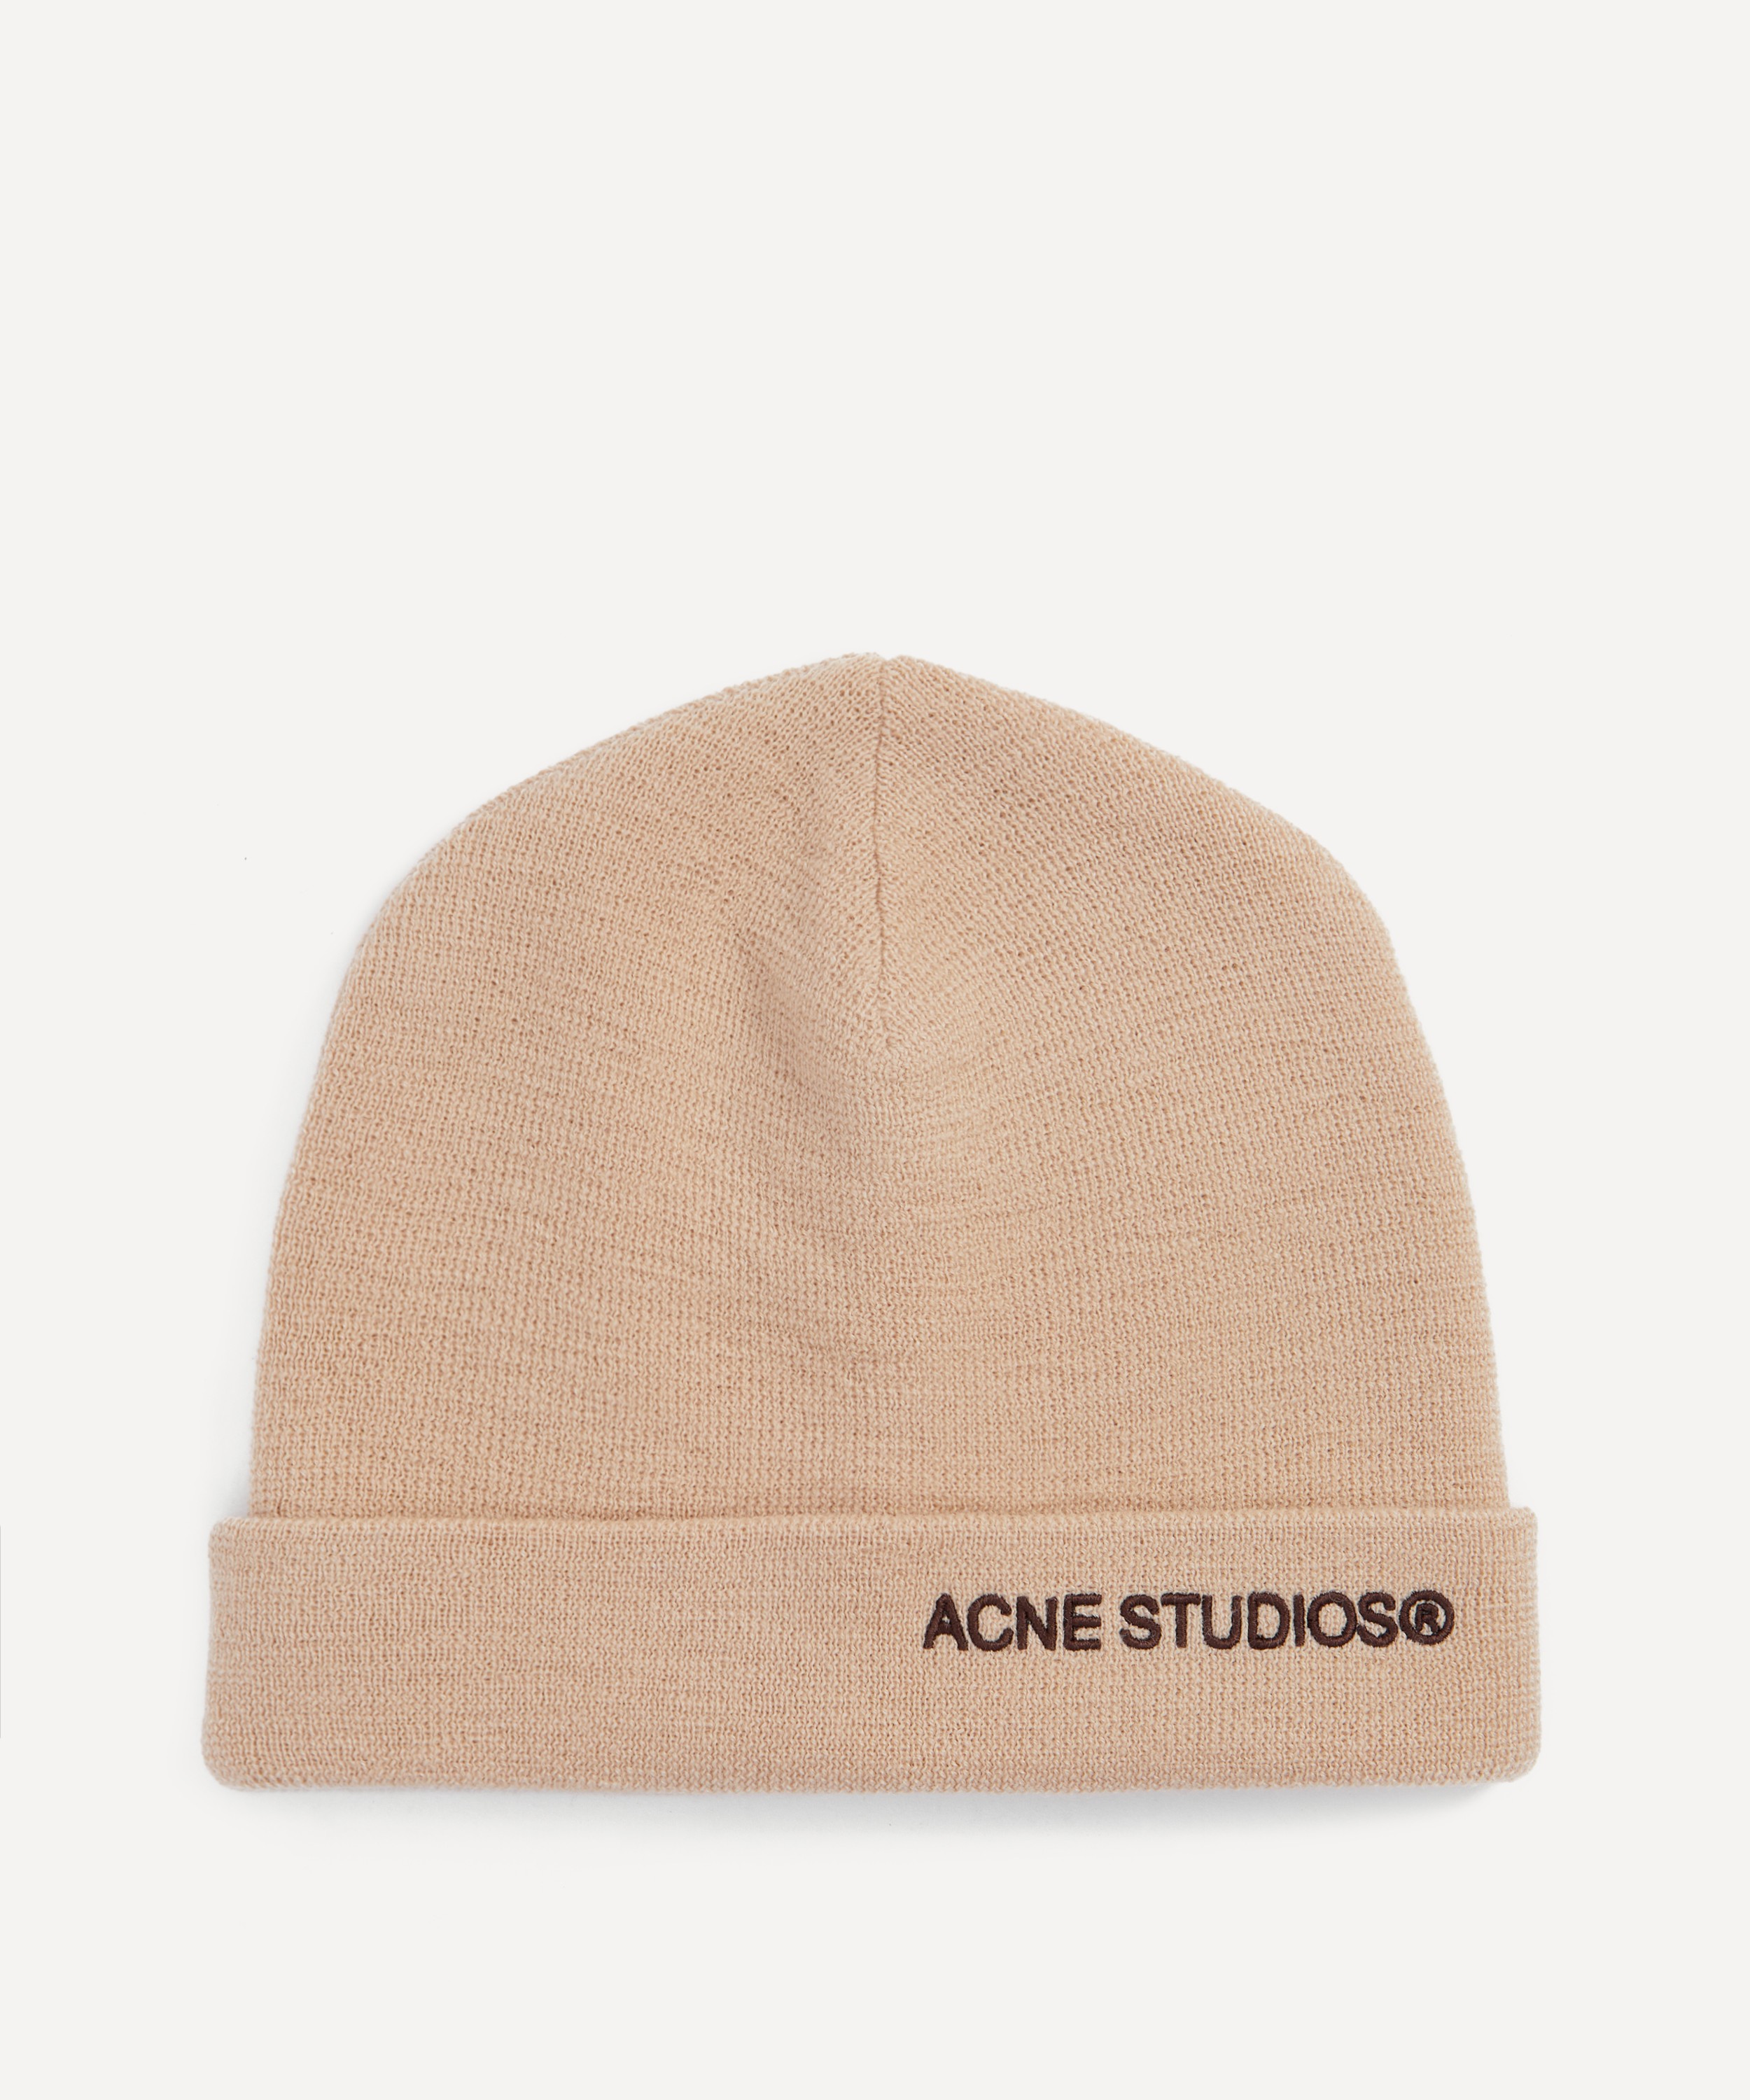 Acne Studios - Logo Beanie